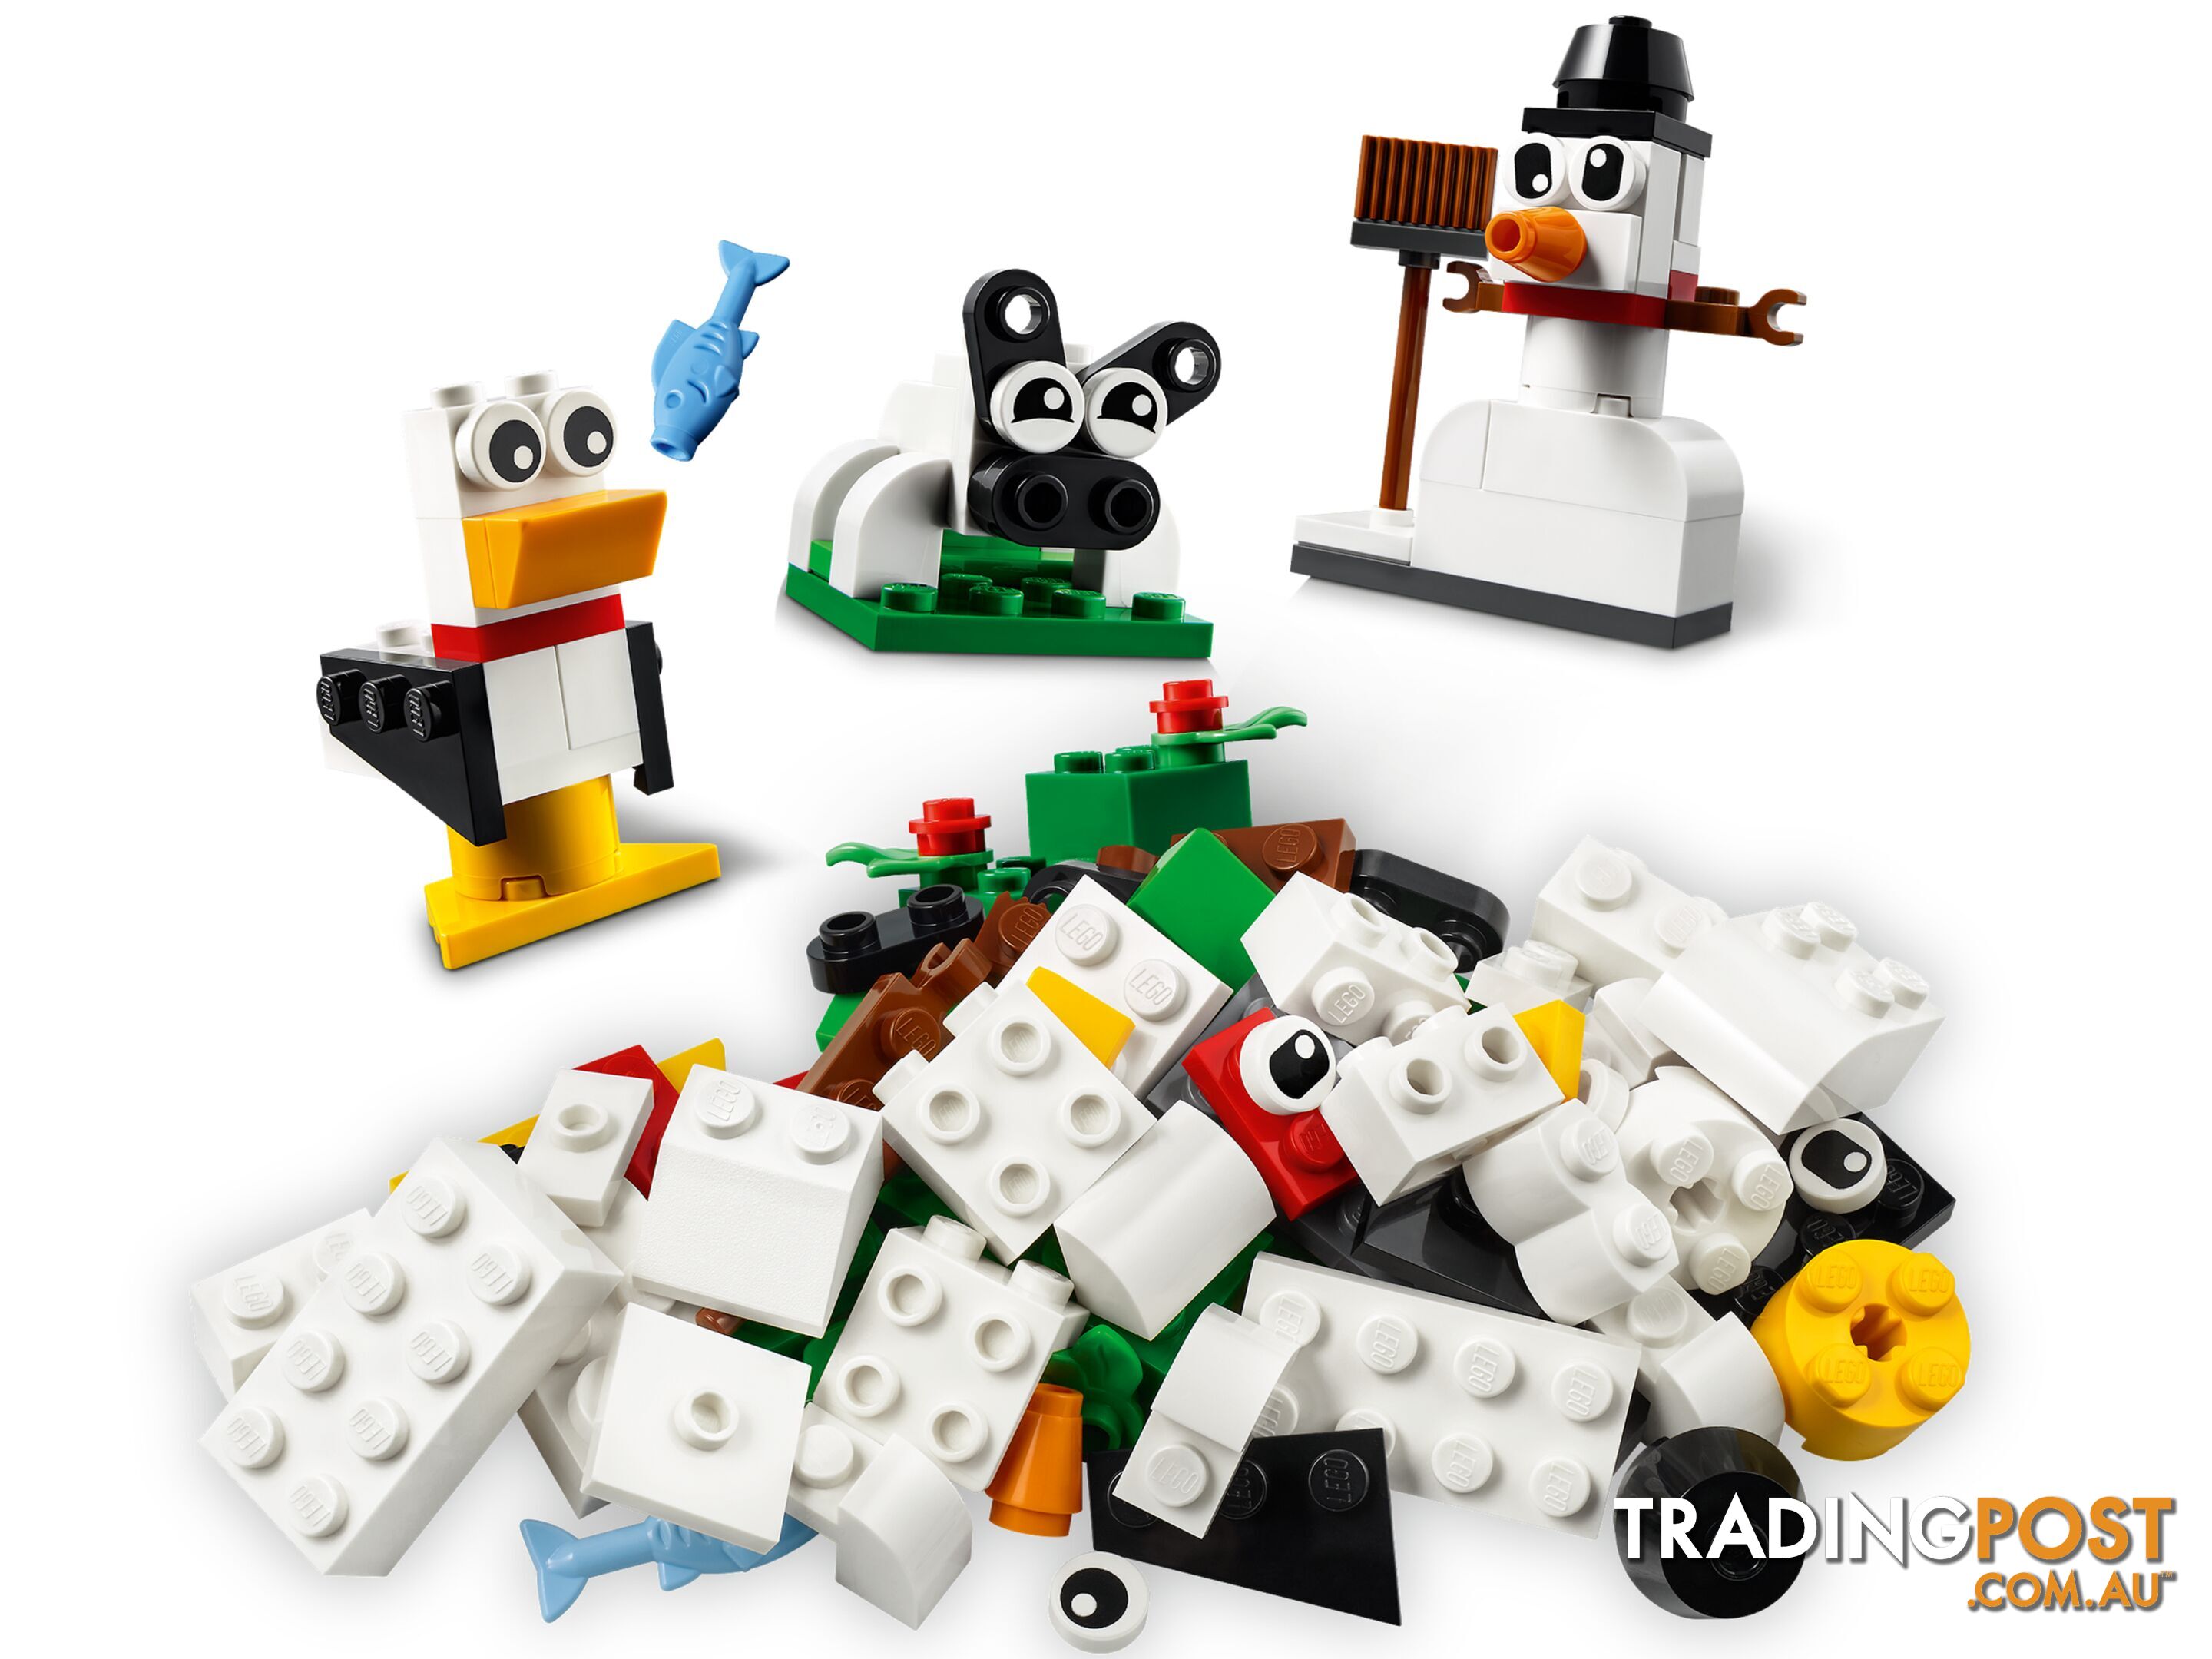 LEGO 11012 Creative White Bricks - Classic - 5702016889277